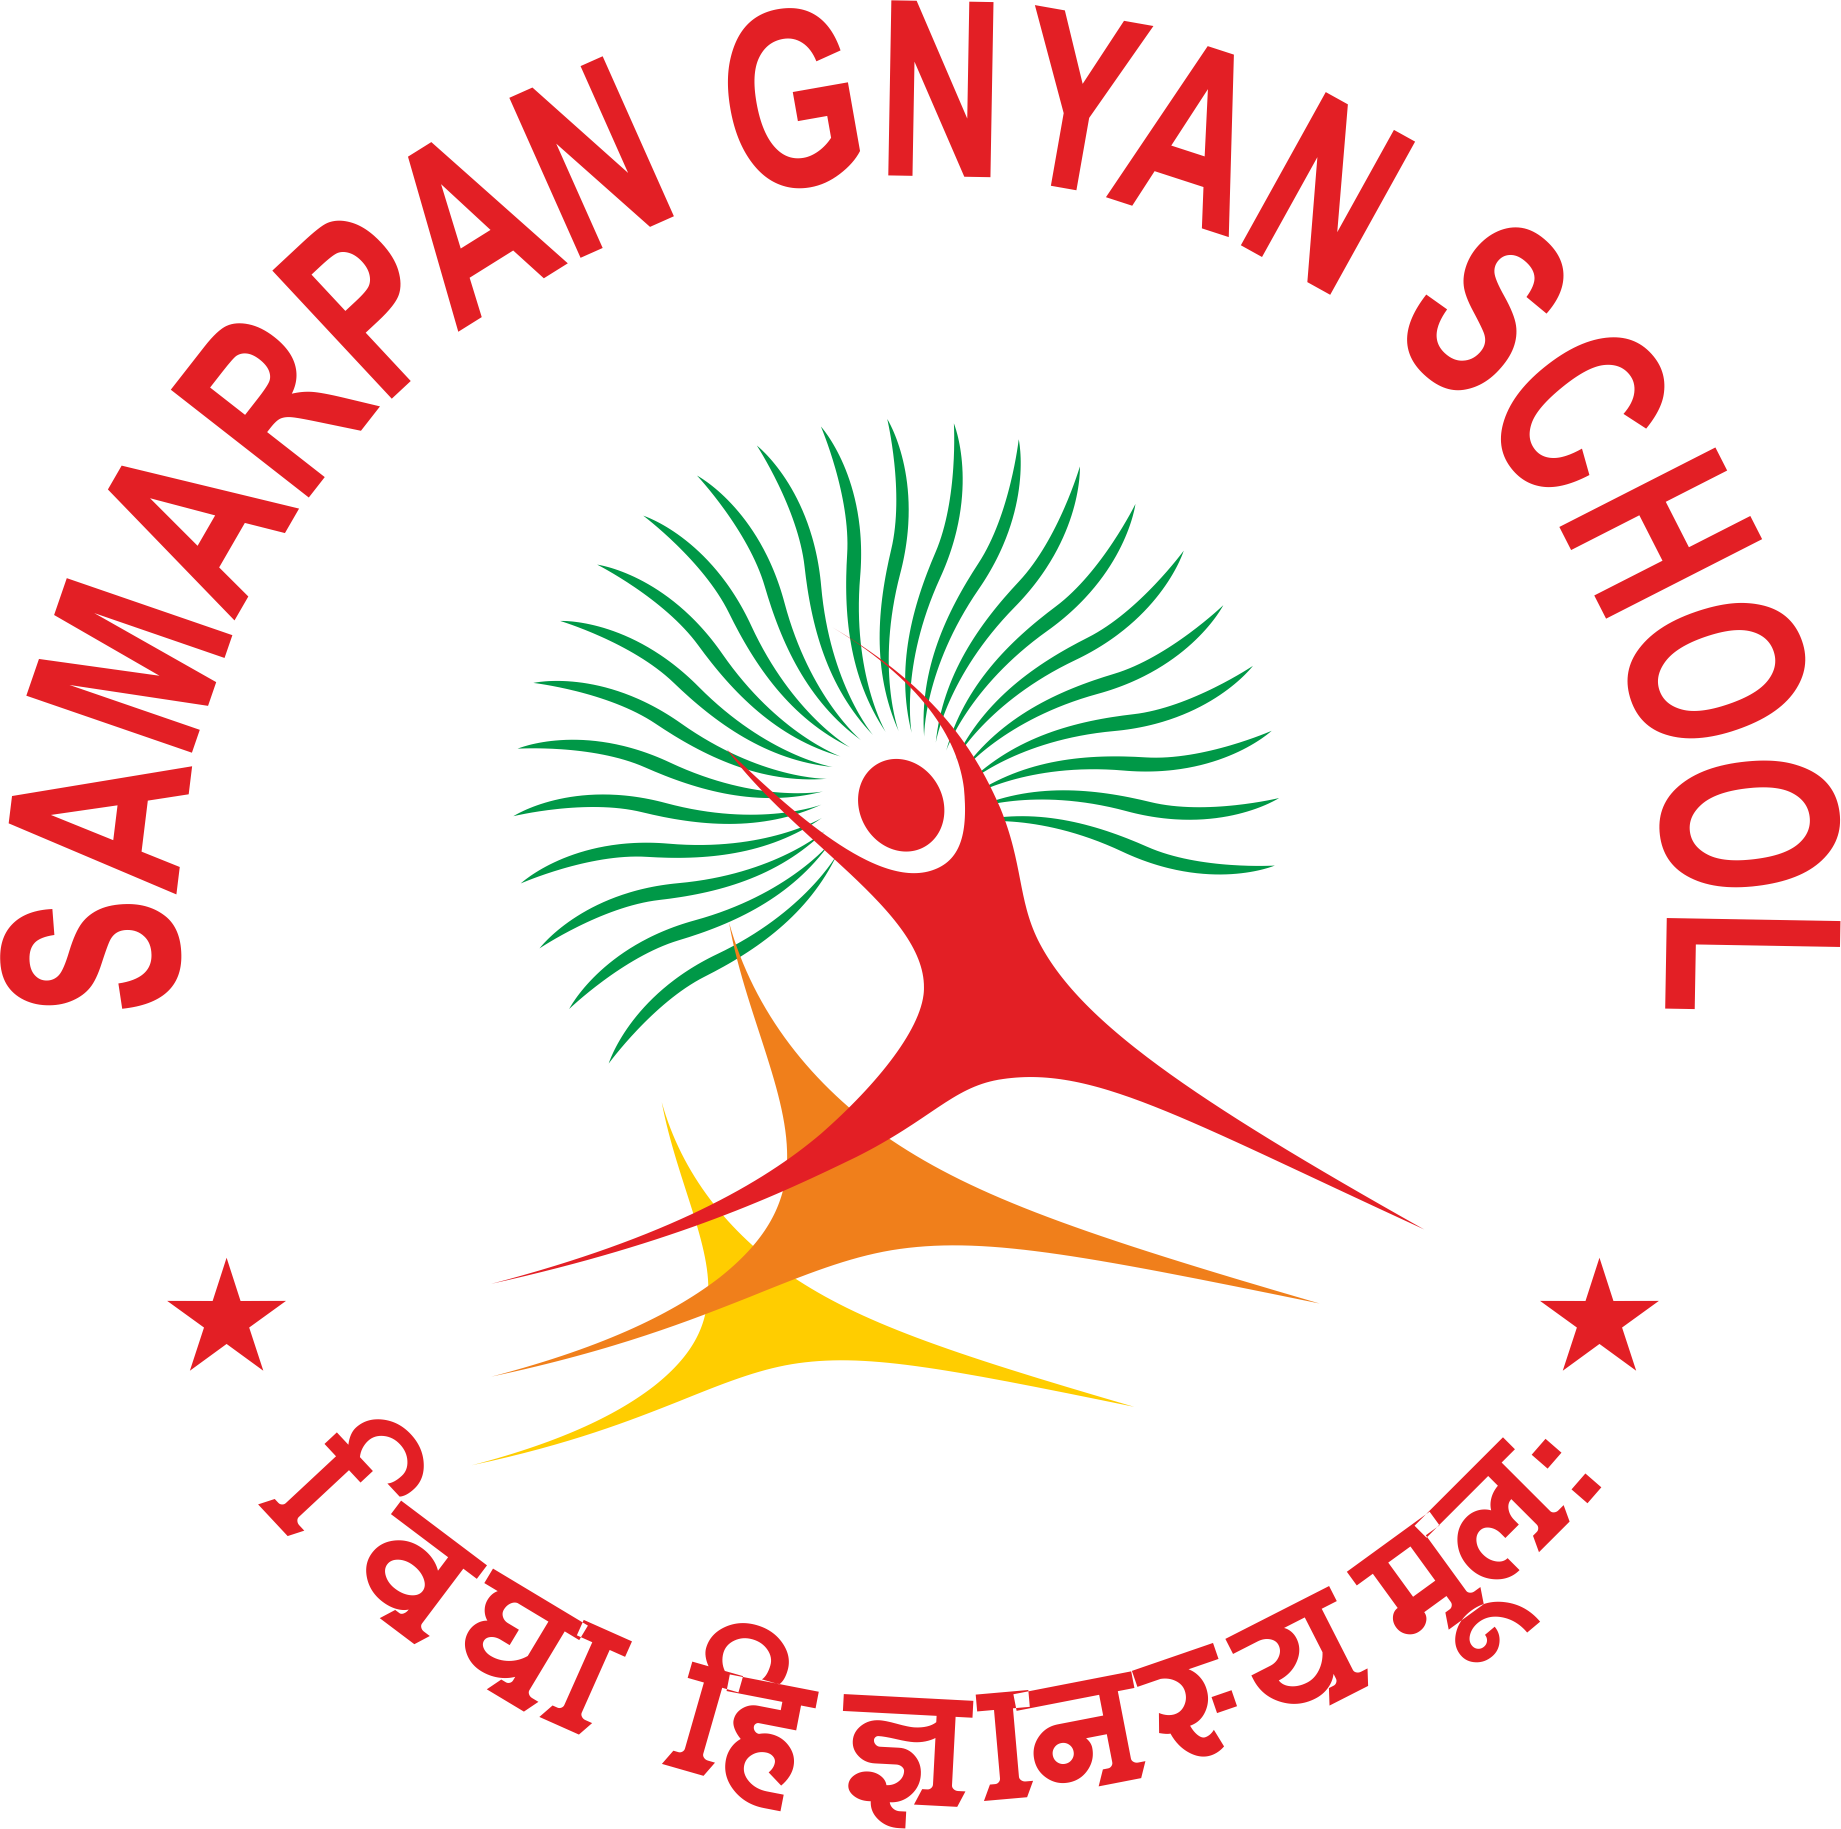 Samarpan Gnyan School